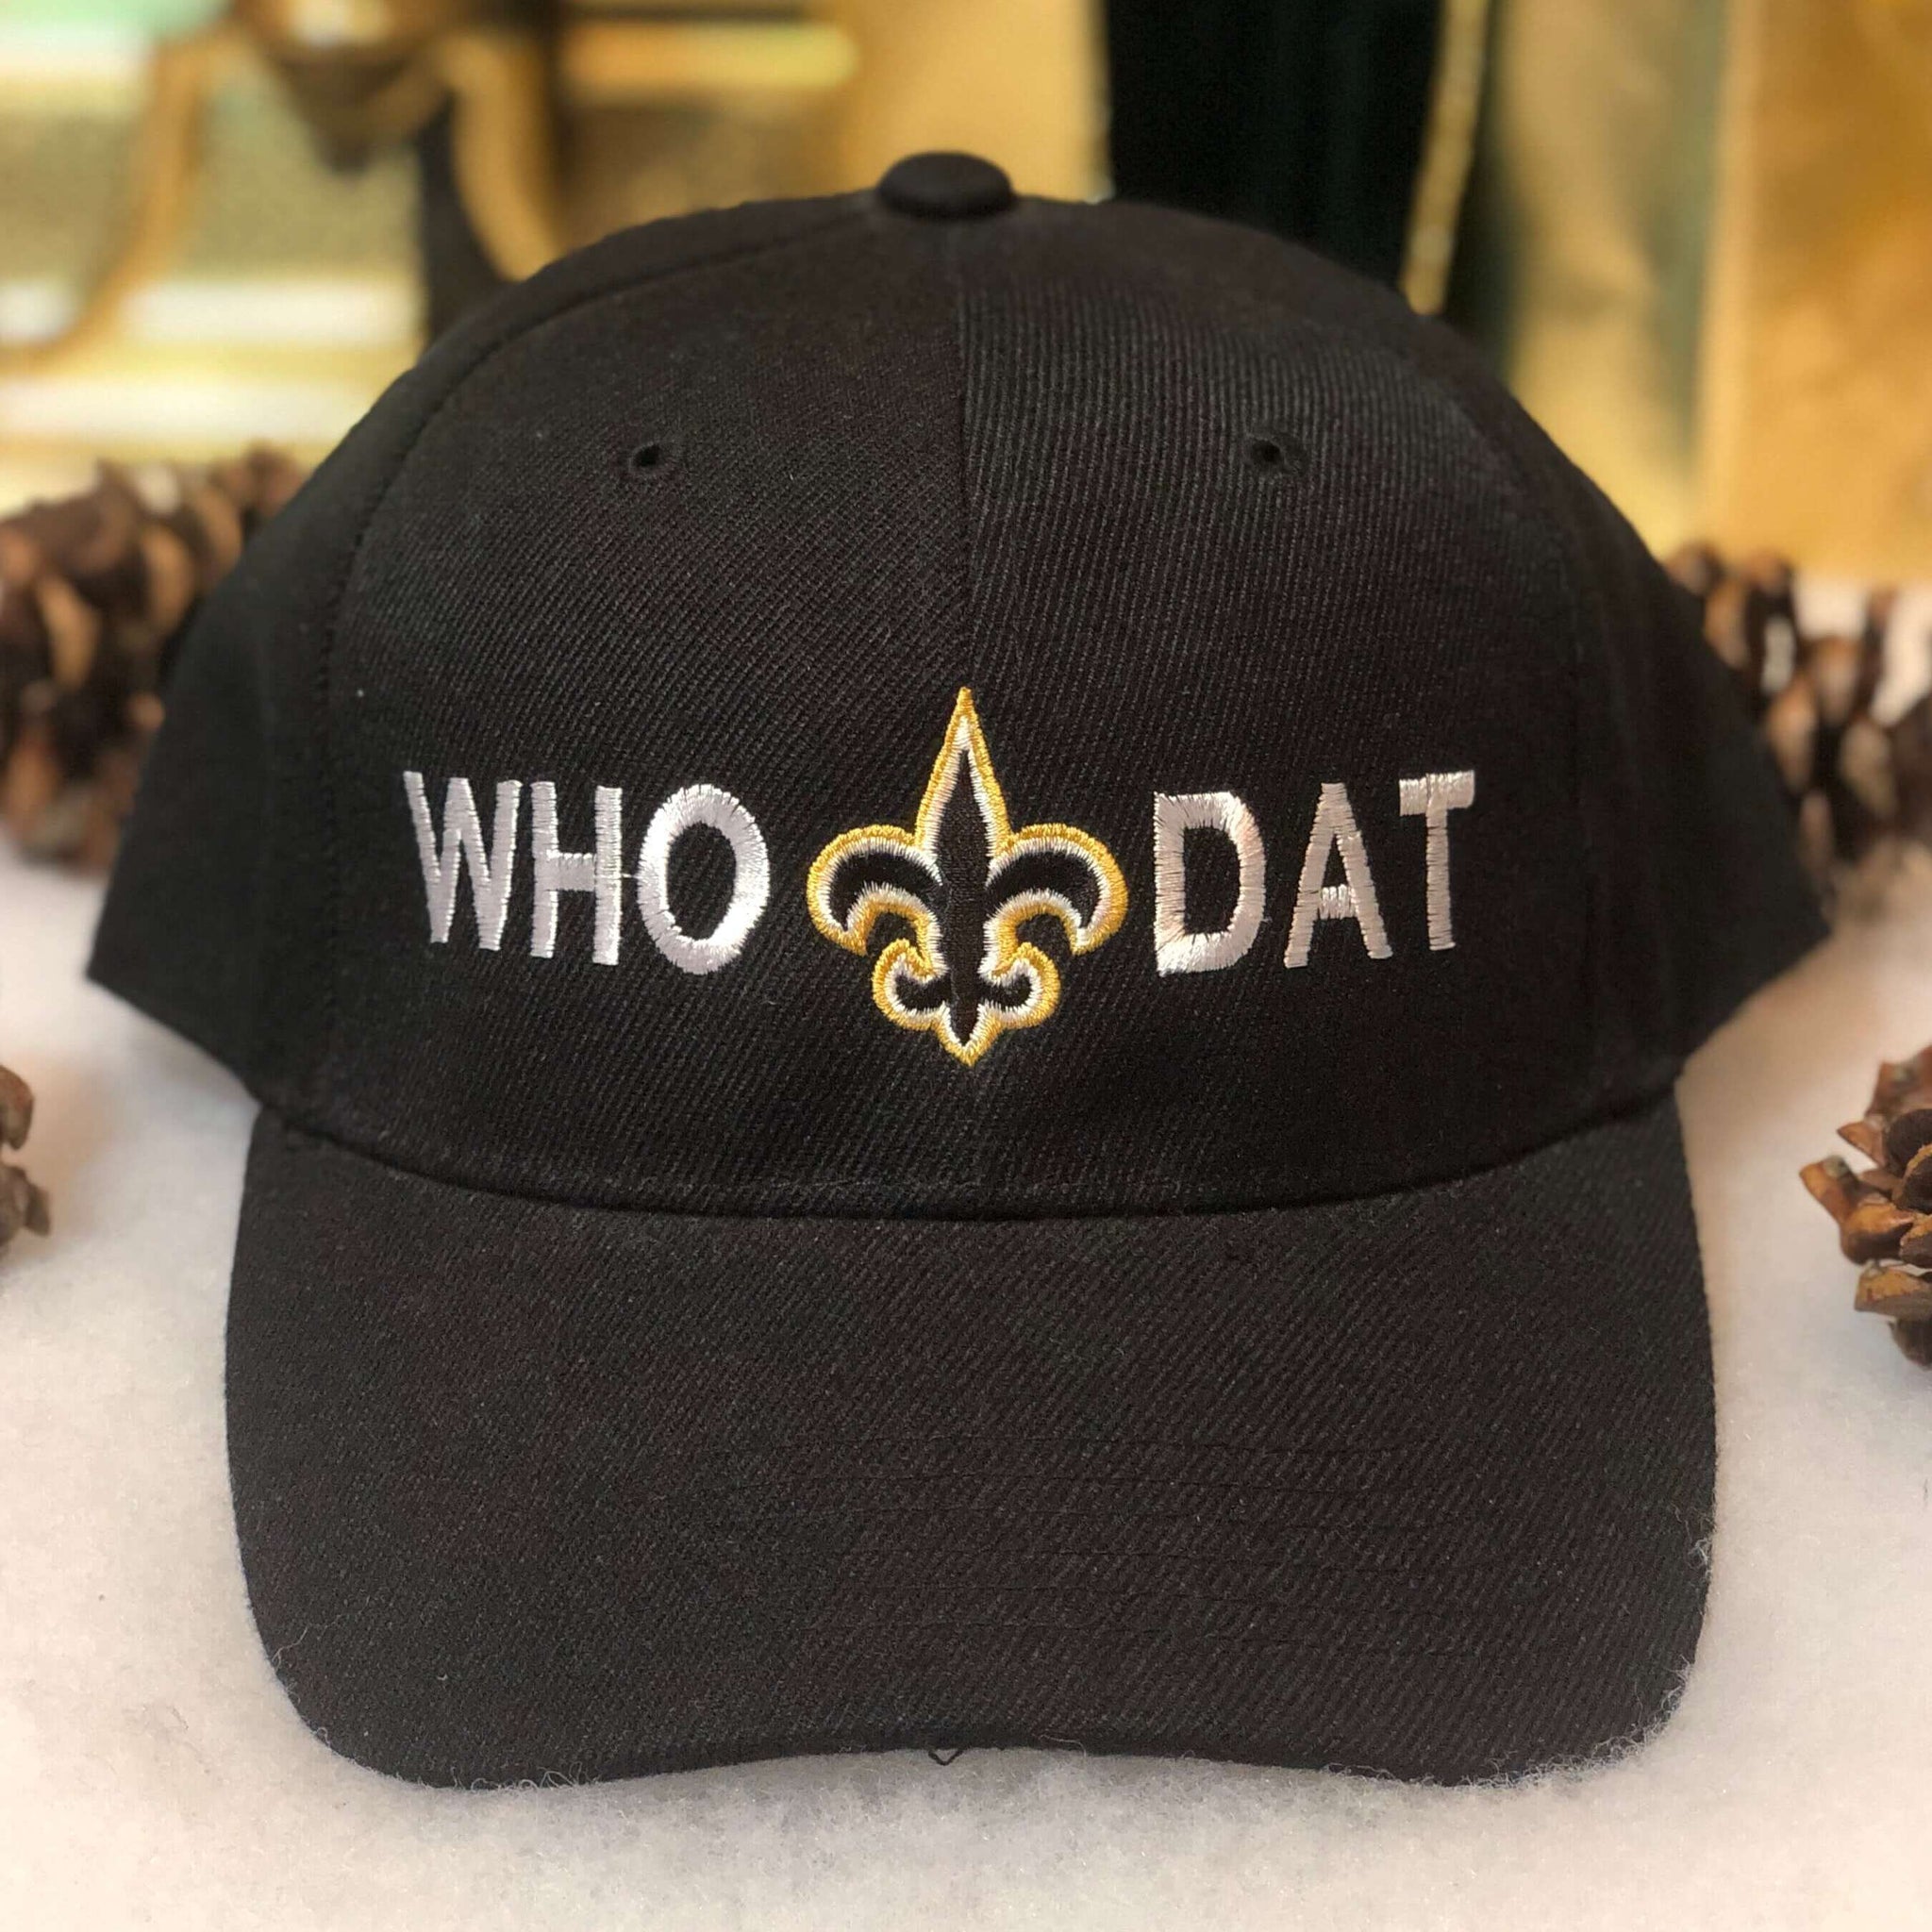 NFL New Orleans Saints "Who Dat" Wool Strapback Hat